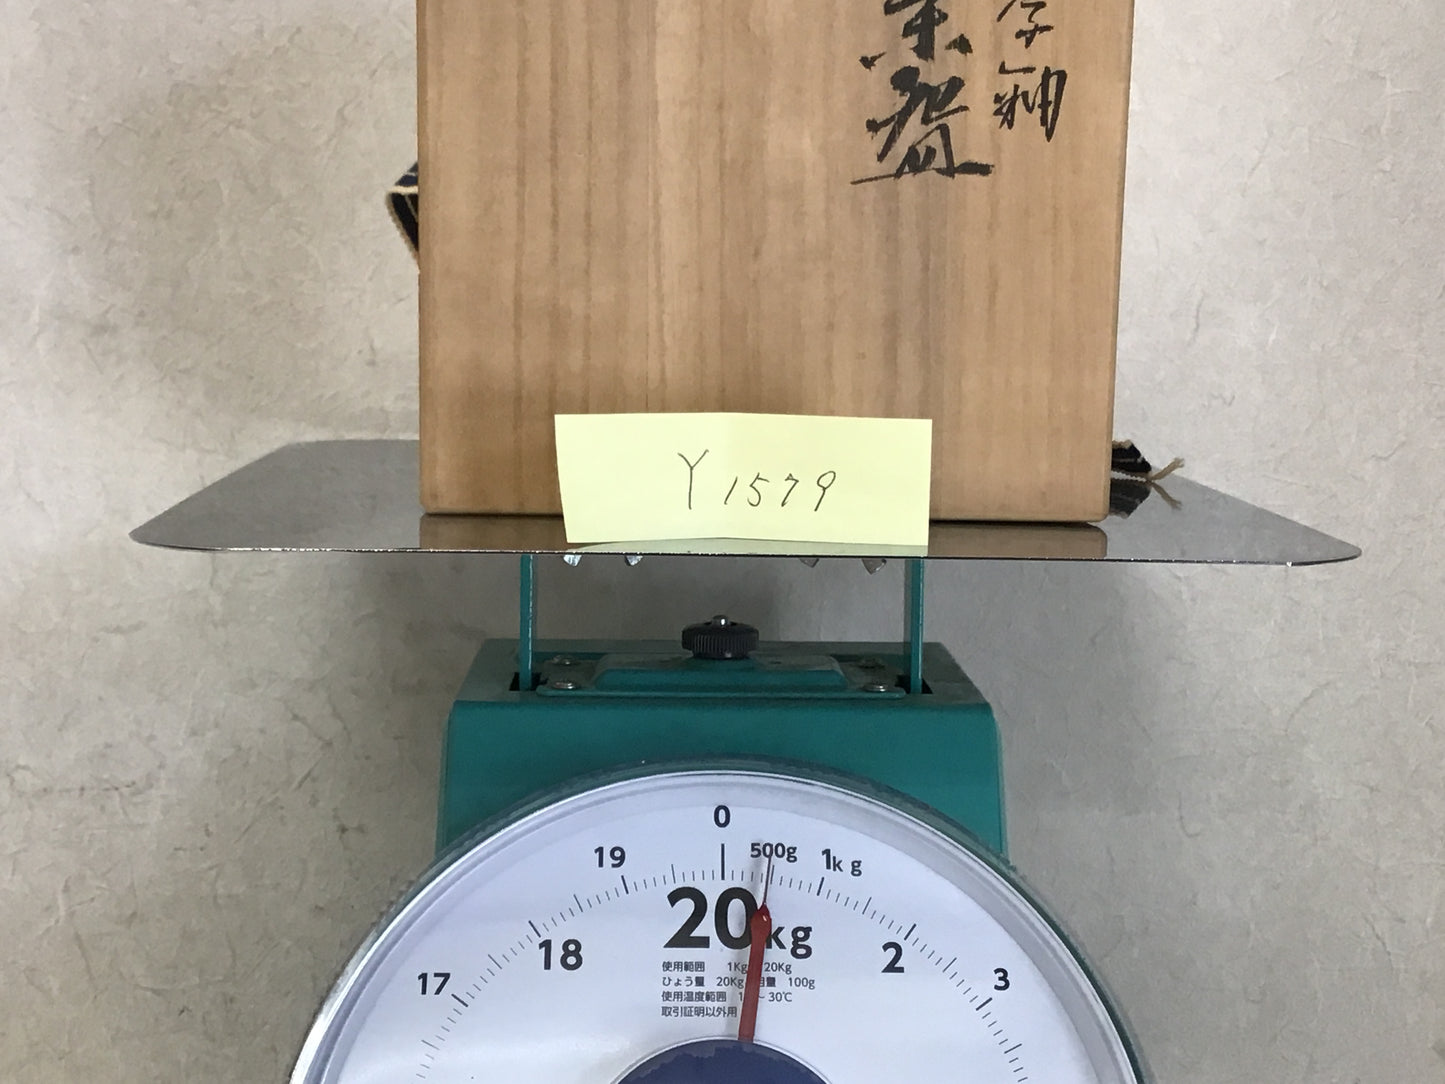 Y1579 CHAWAN Kutani-ware signed box Japanese bowl pottery Japan tea ceremony